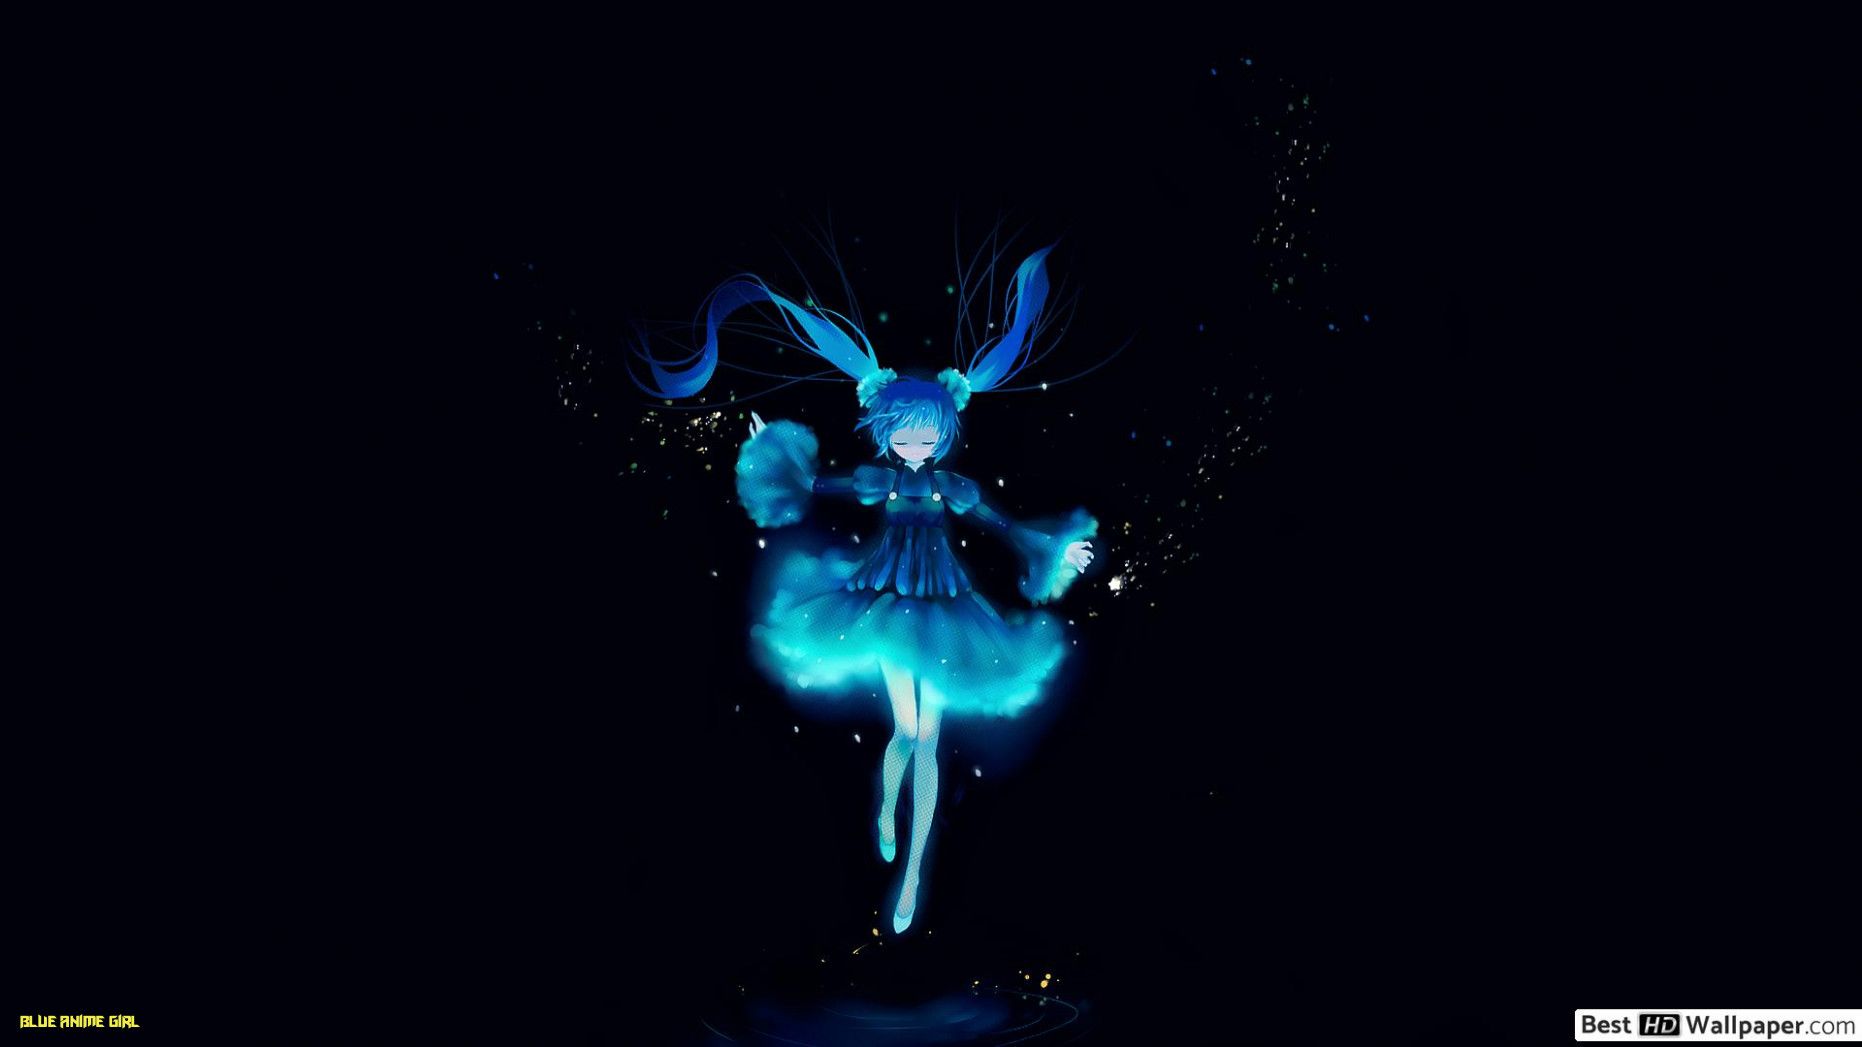 Blue Anime Girl HD Wallpaper Download